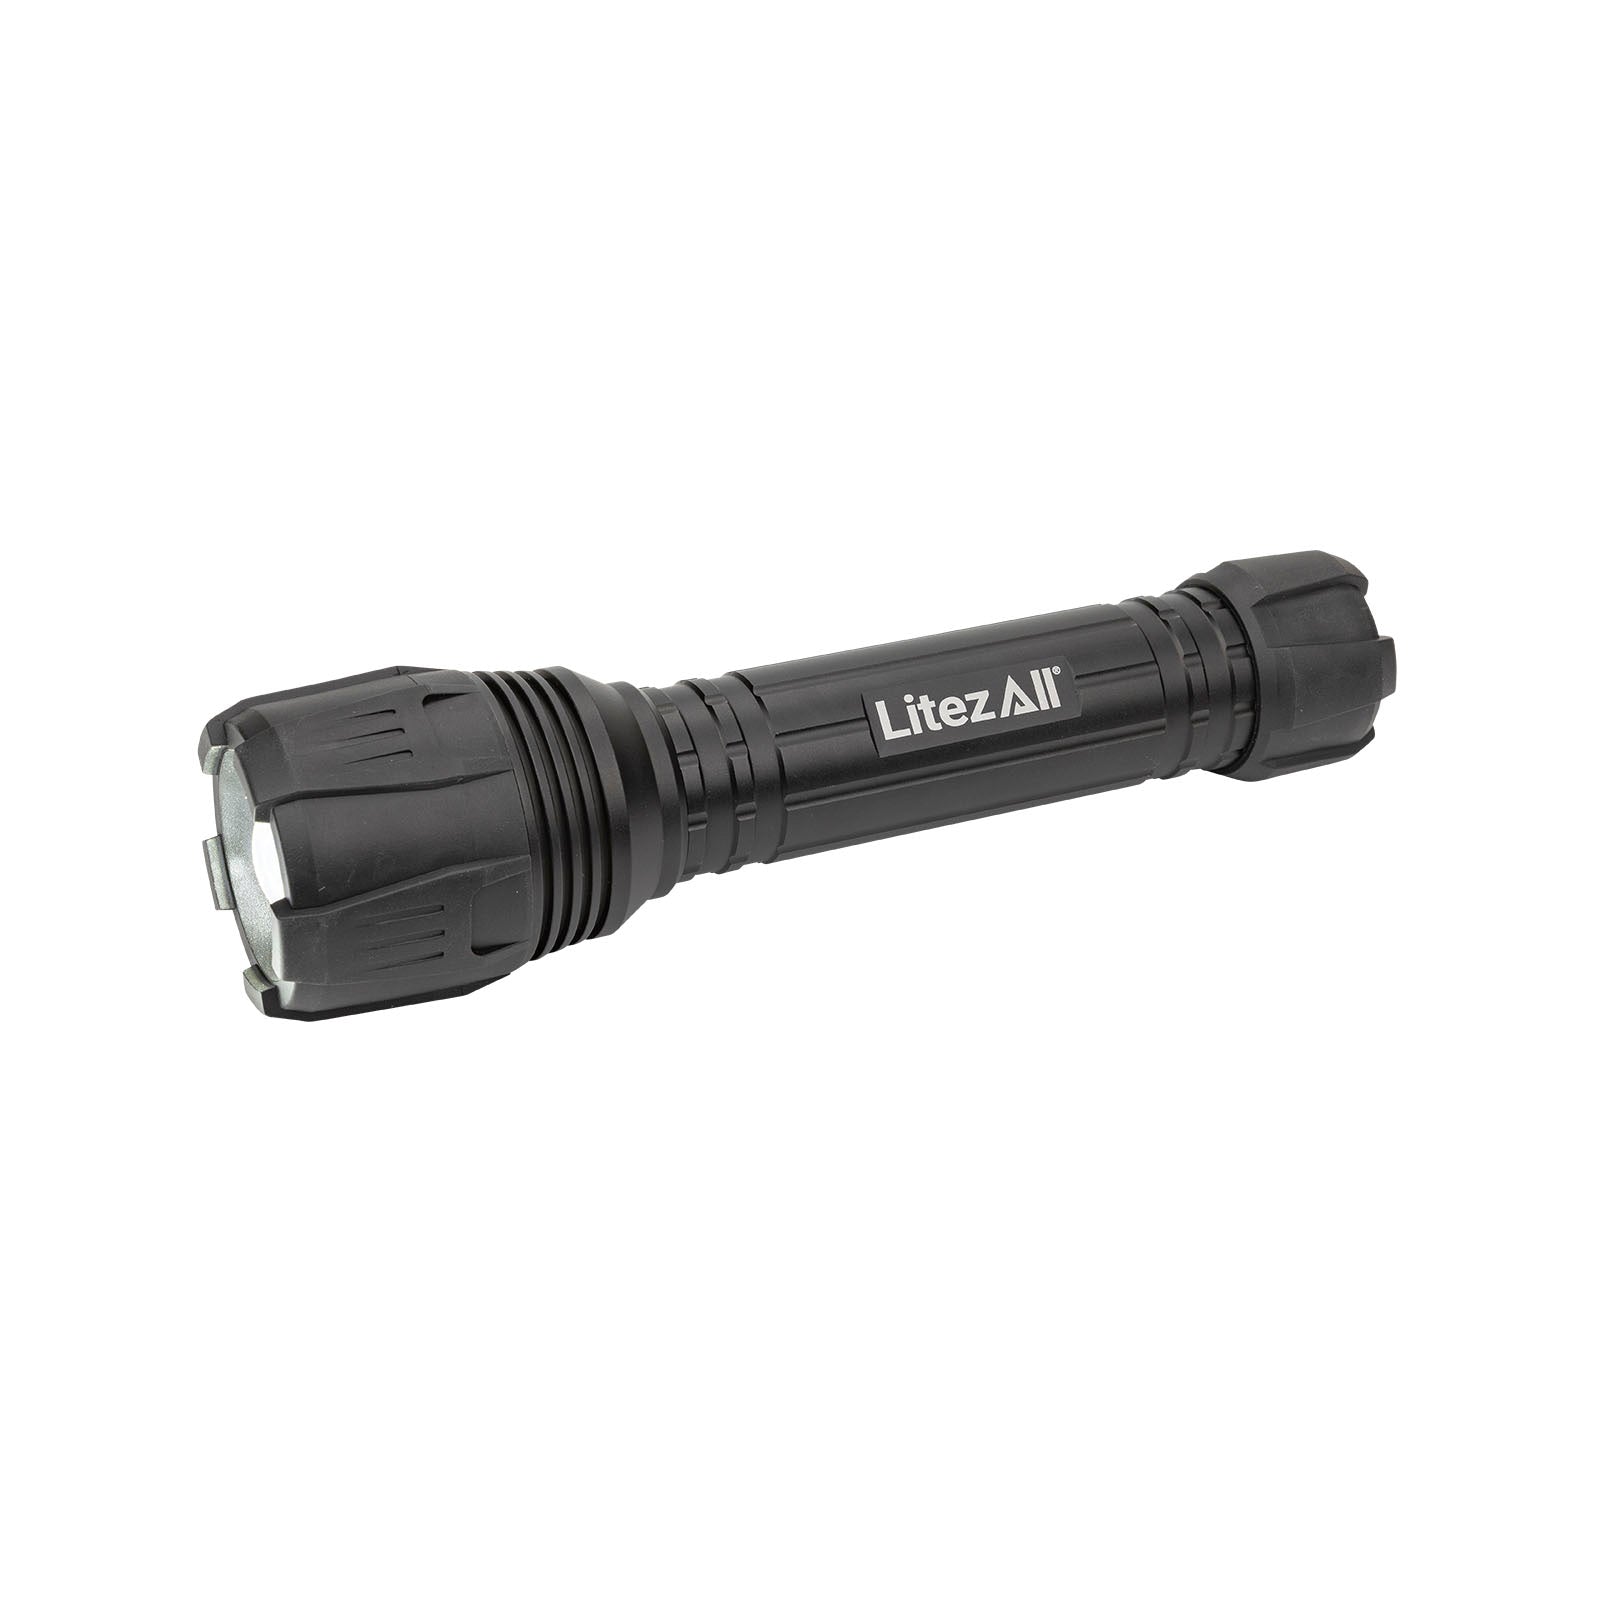 LitezAll Nearly Invincible 4000 Lumen Tactical Flashlight - LitezAll - Tactical Flashlights - 1